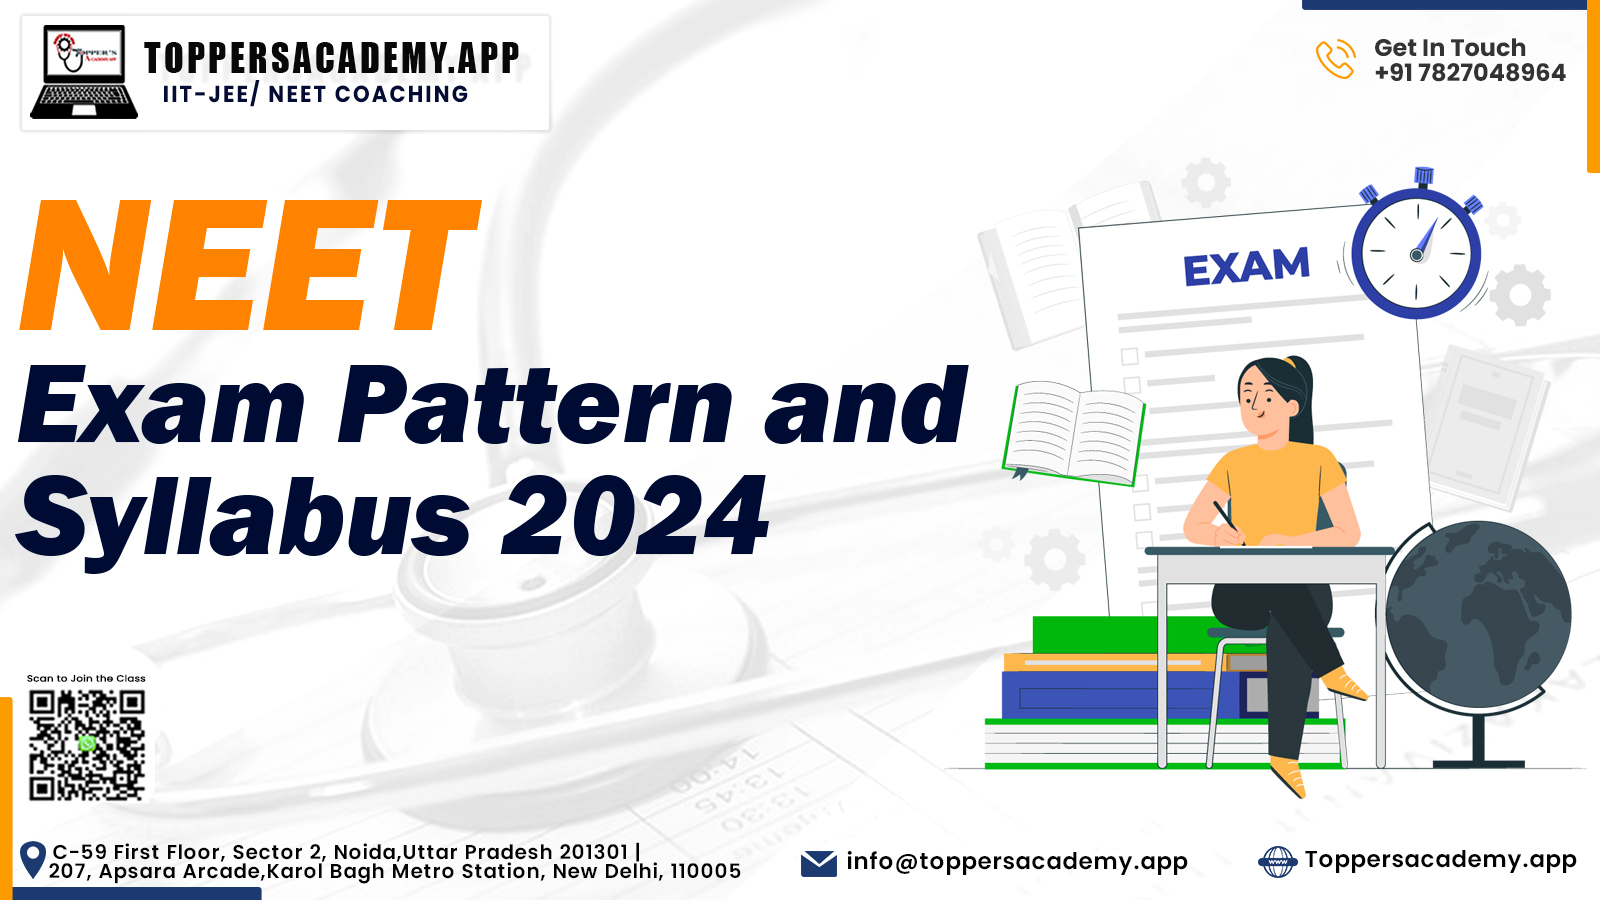 NEET Exam Pattern and Syllabus 2024